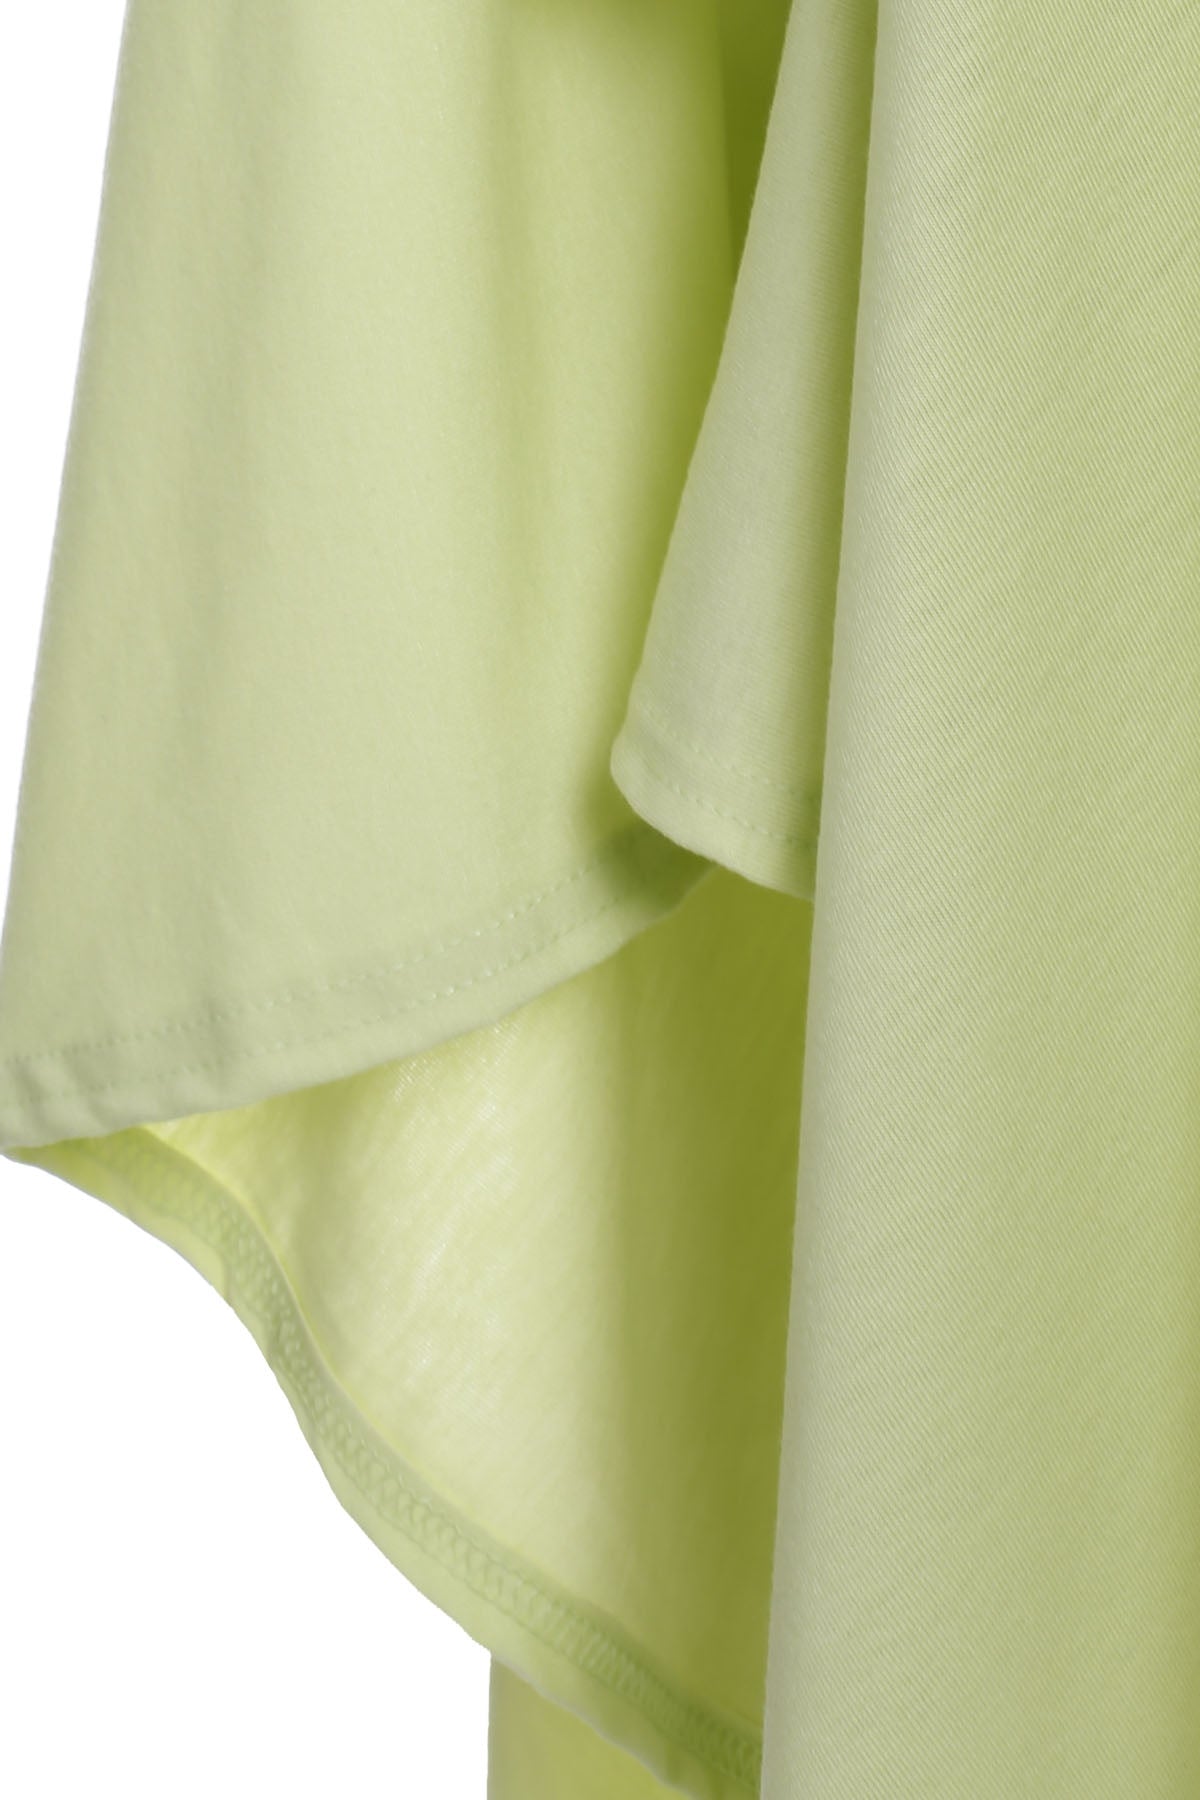 Batwing Sleeve Asymmetric Handkerchief Plus Size Tunic Top Sz. (M)